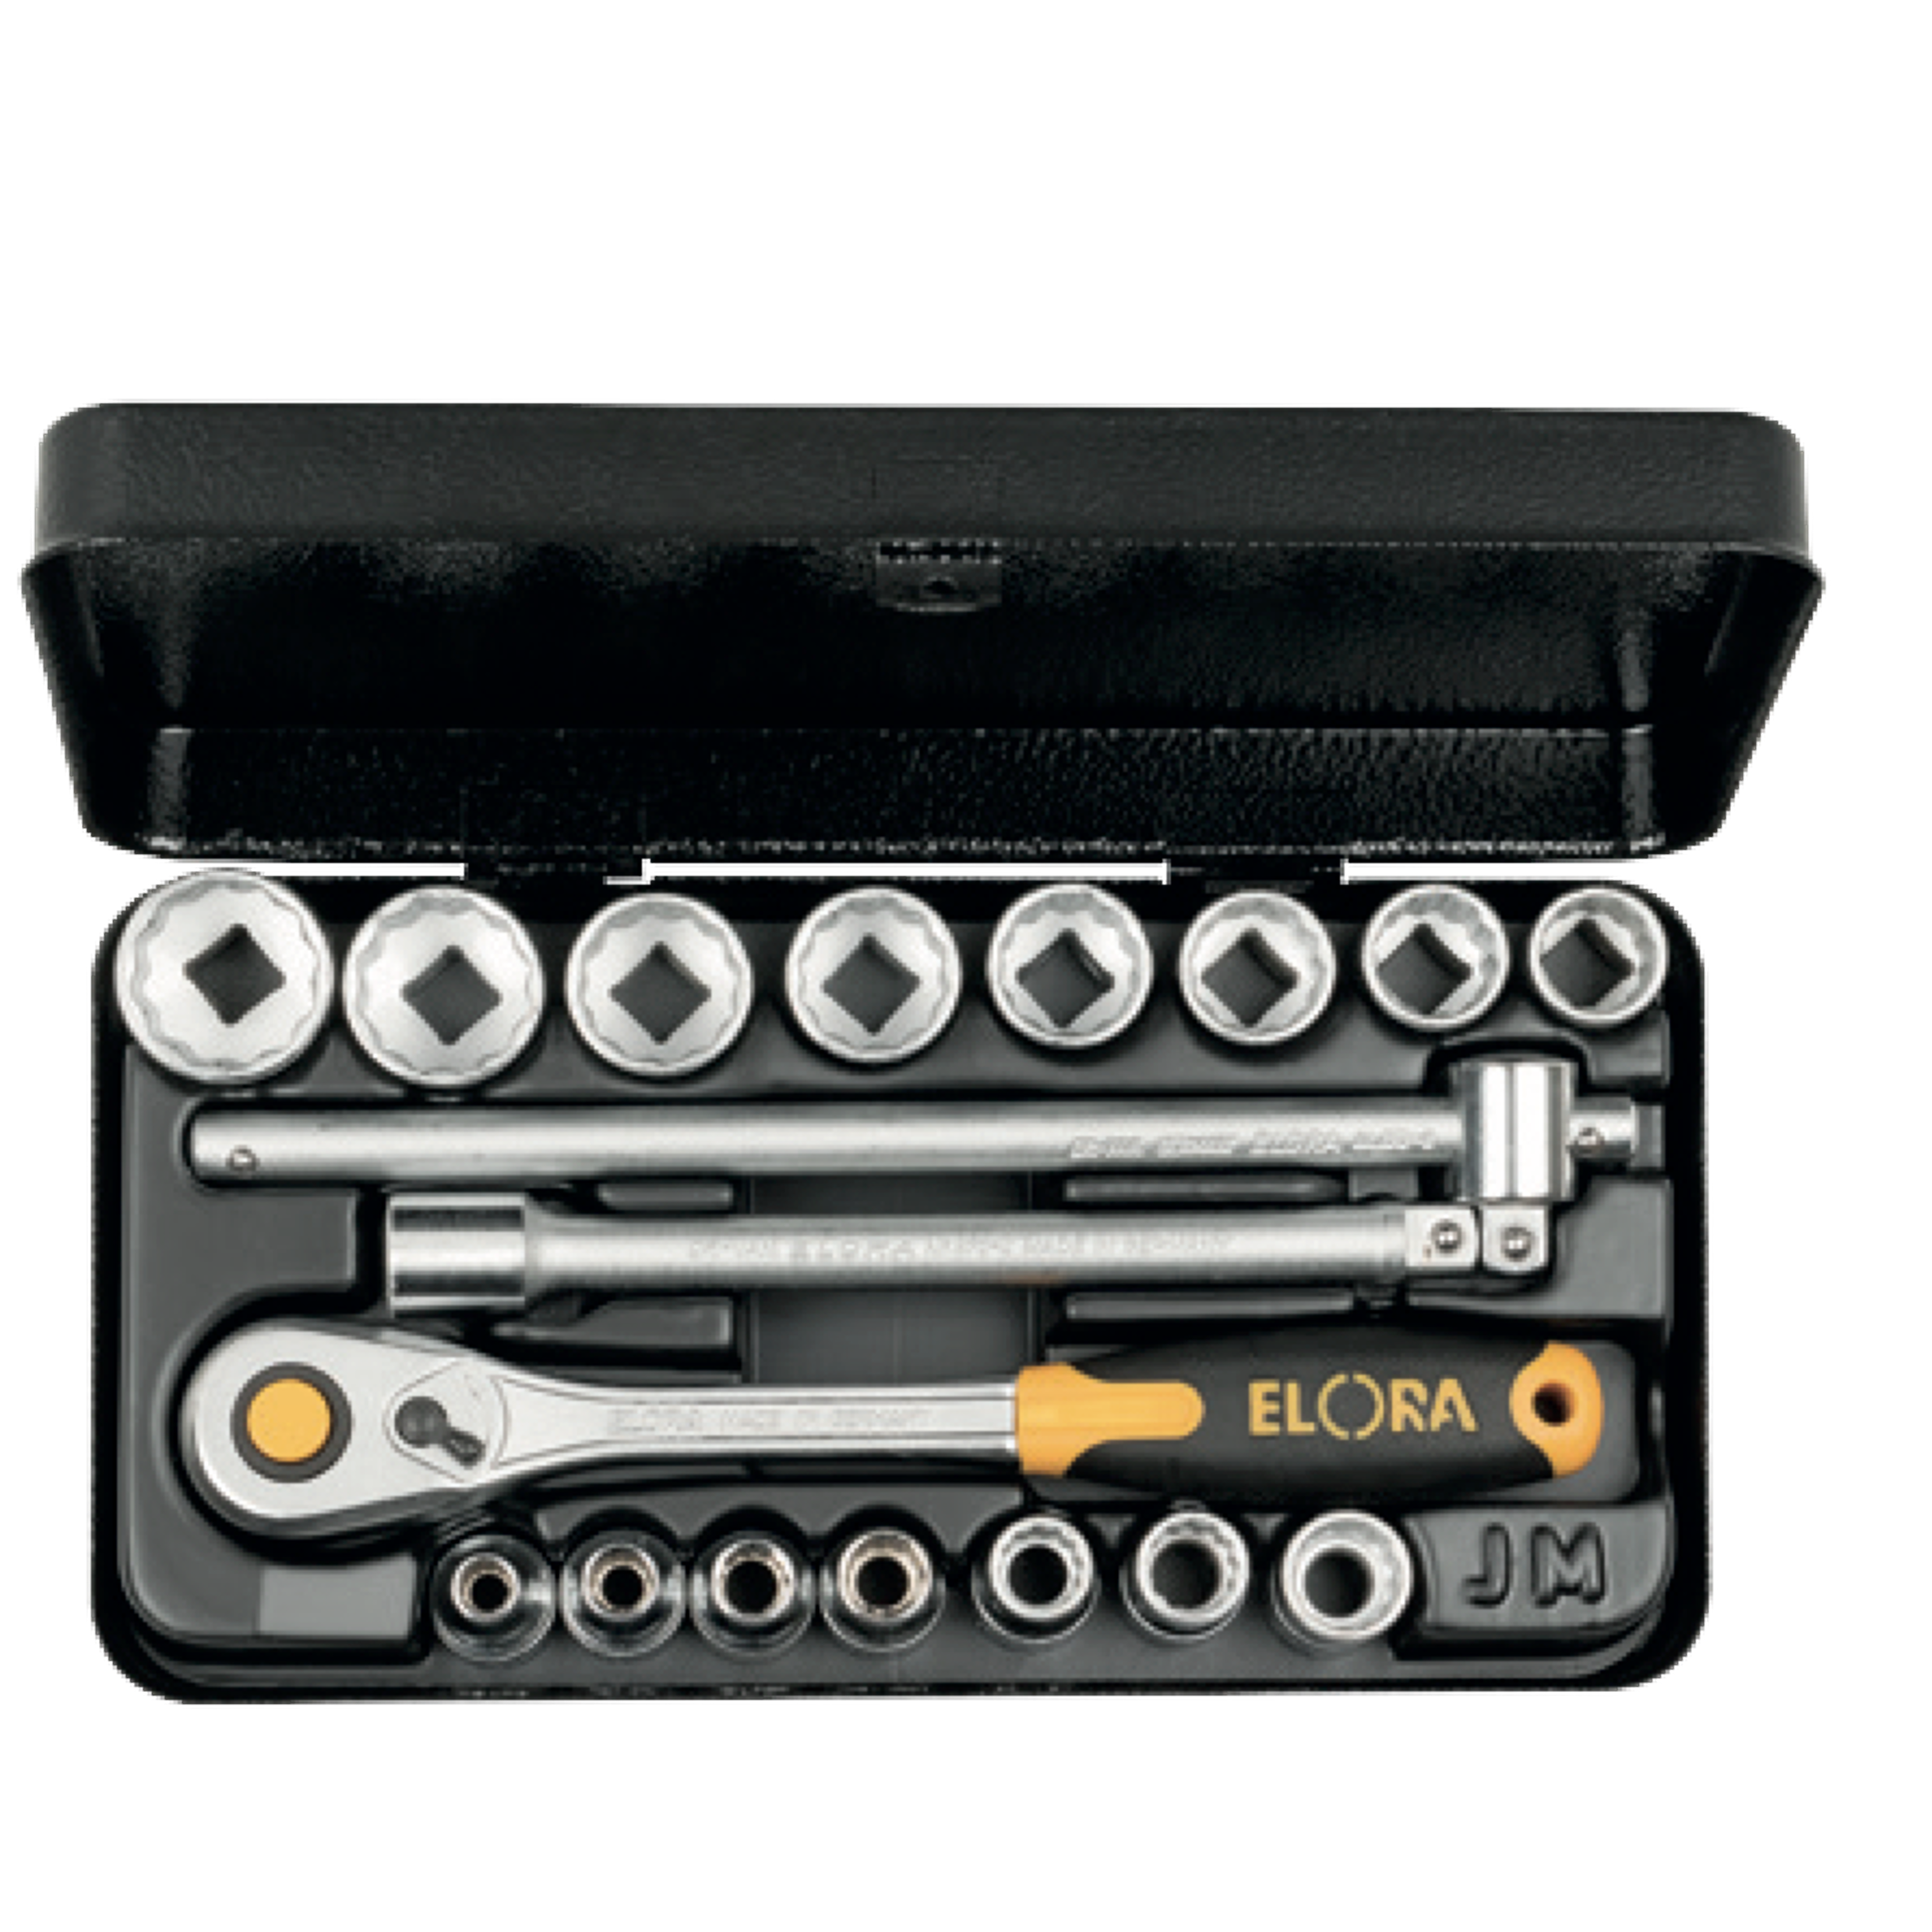 ELORA 871-J Socket Set 3/8" (ELORA Tools) - Premium Socket Assortments 3/8" from ELORA - Shop now at Yew Aik.